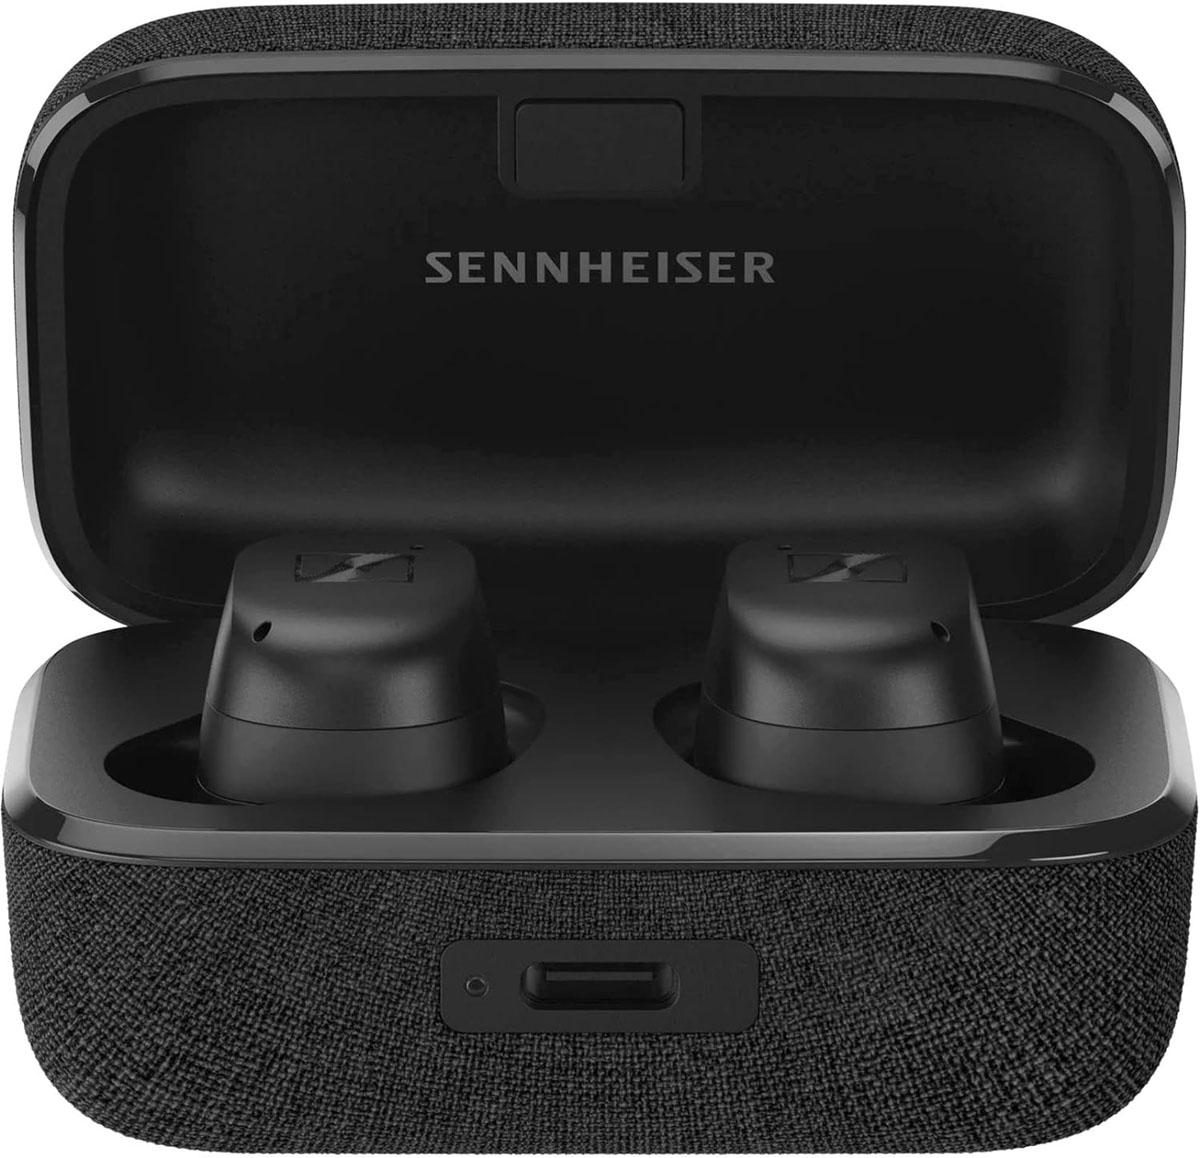 Sennheiser Momentum True Wireless 3 Earbuds Earphones for $142.39 Shipped